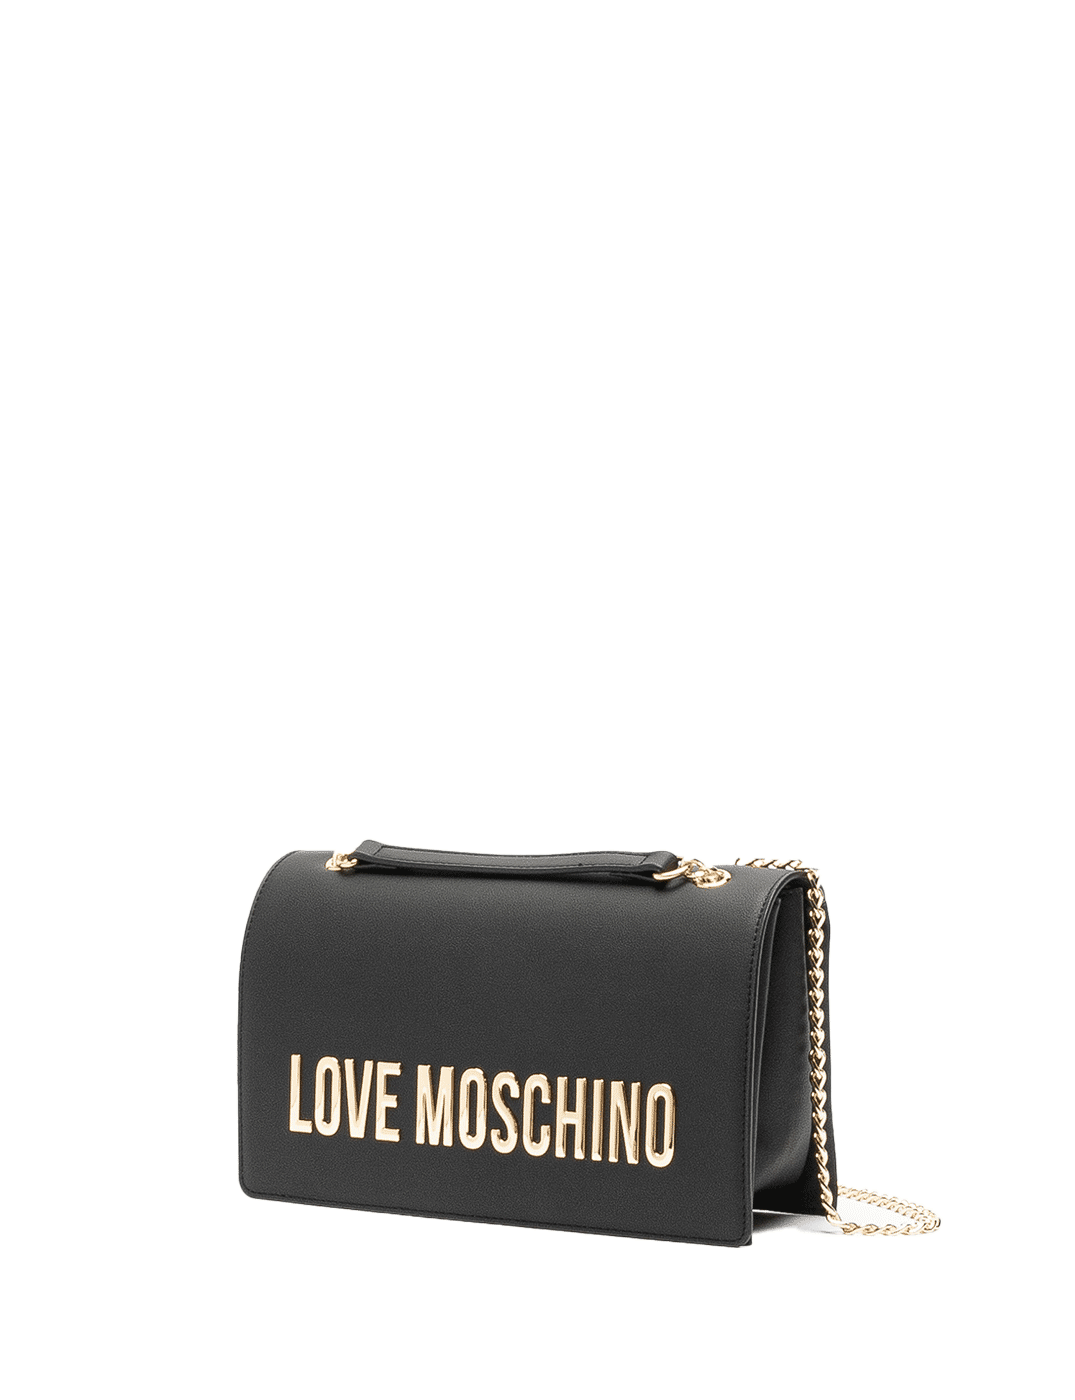 Love Moschino BAG IN BAG - Handbag - black/black - Zalando